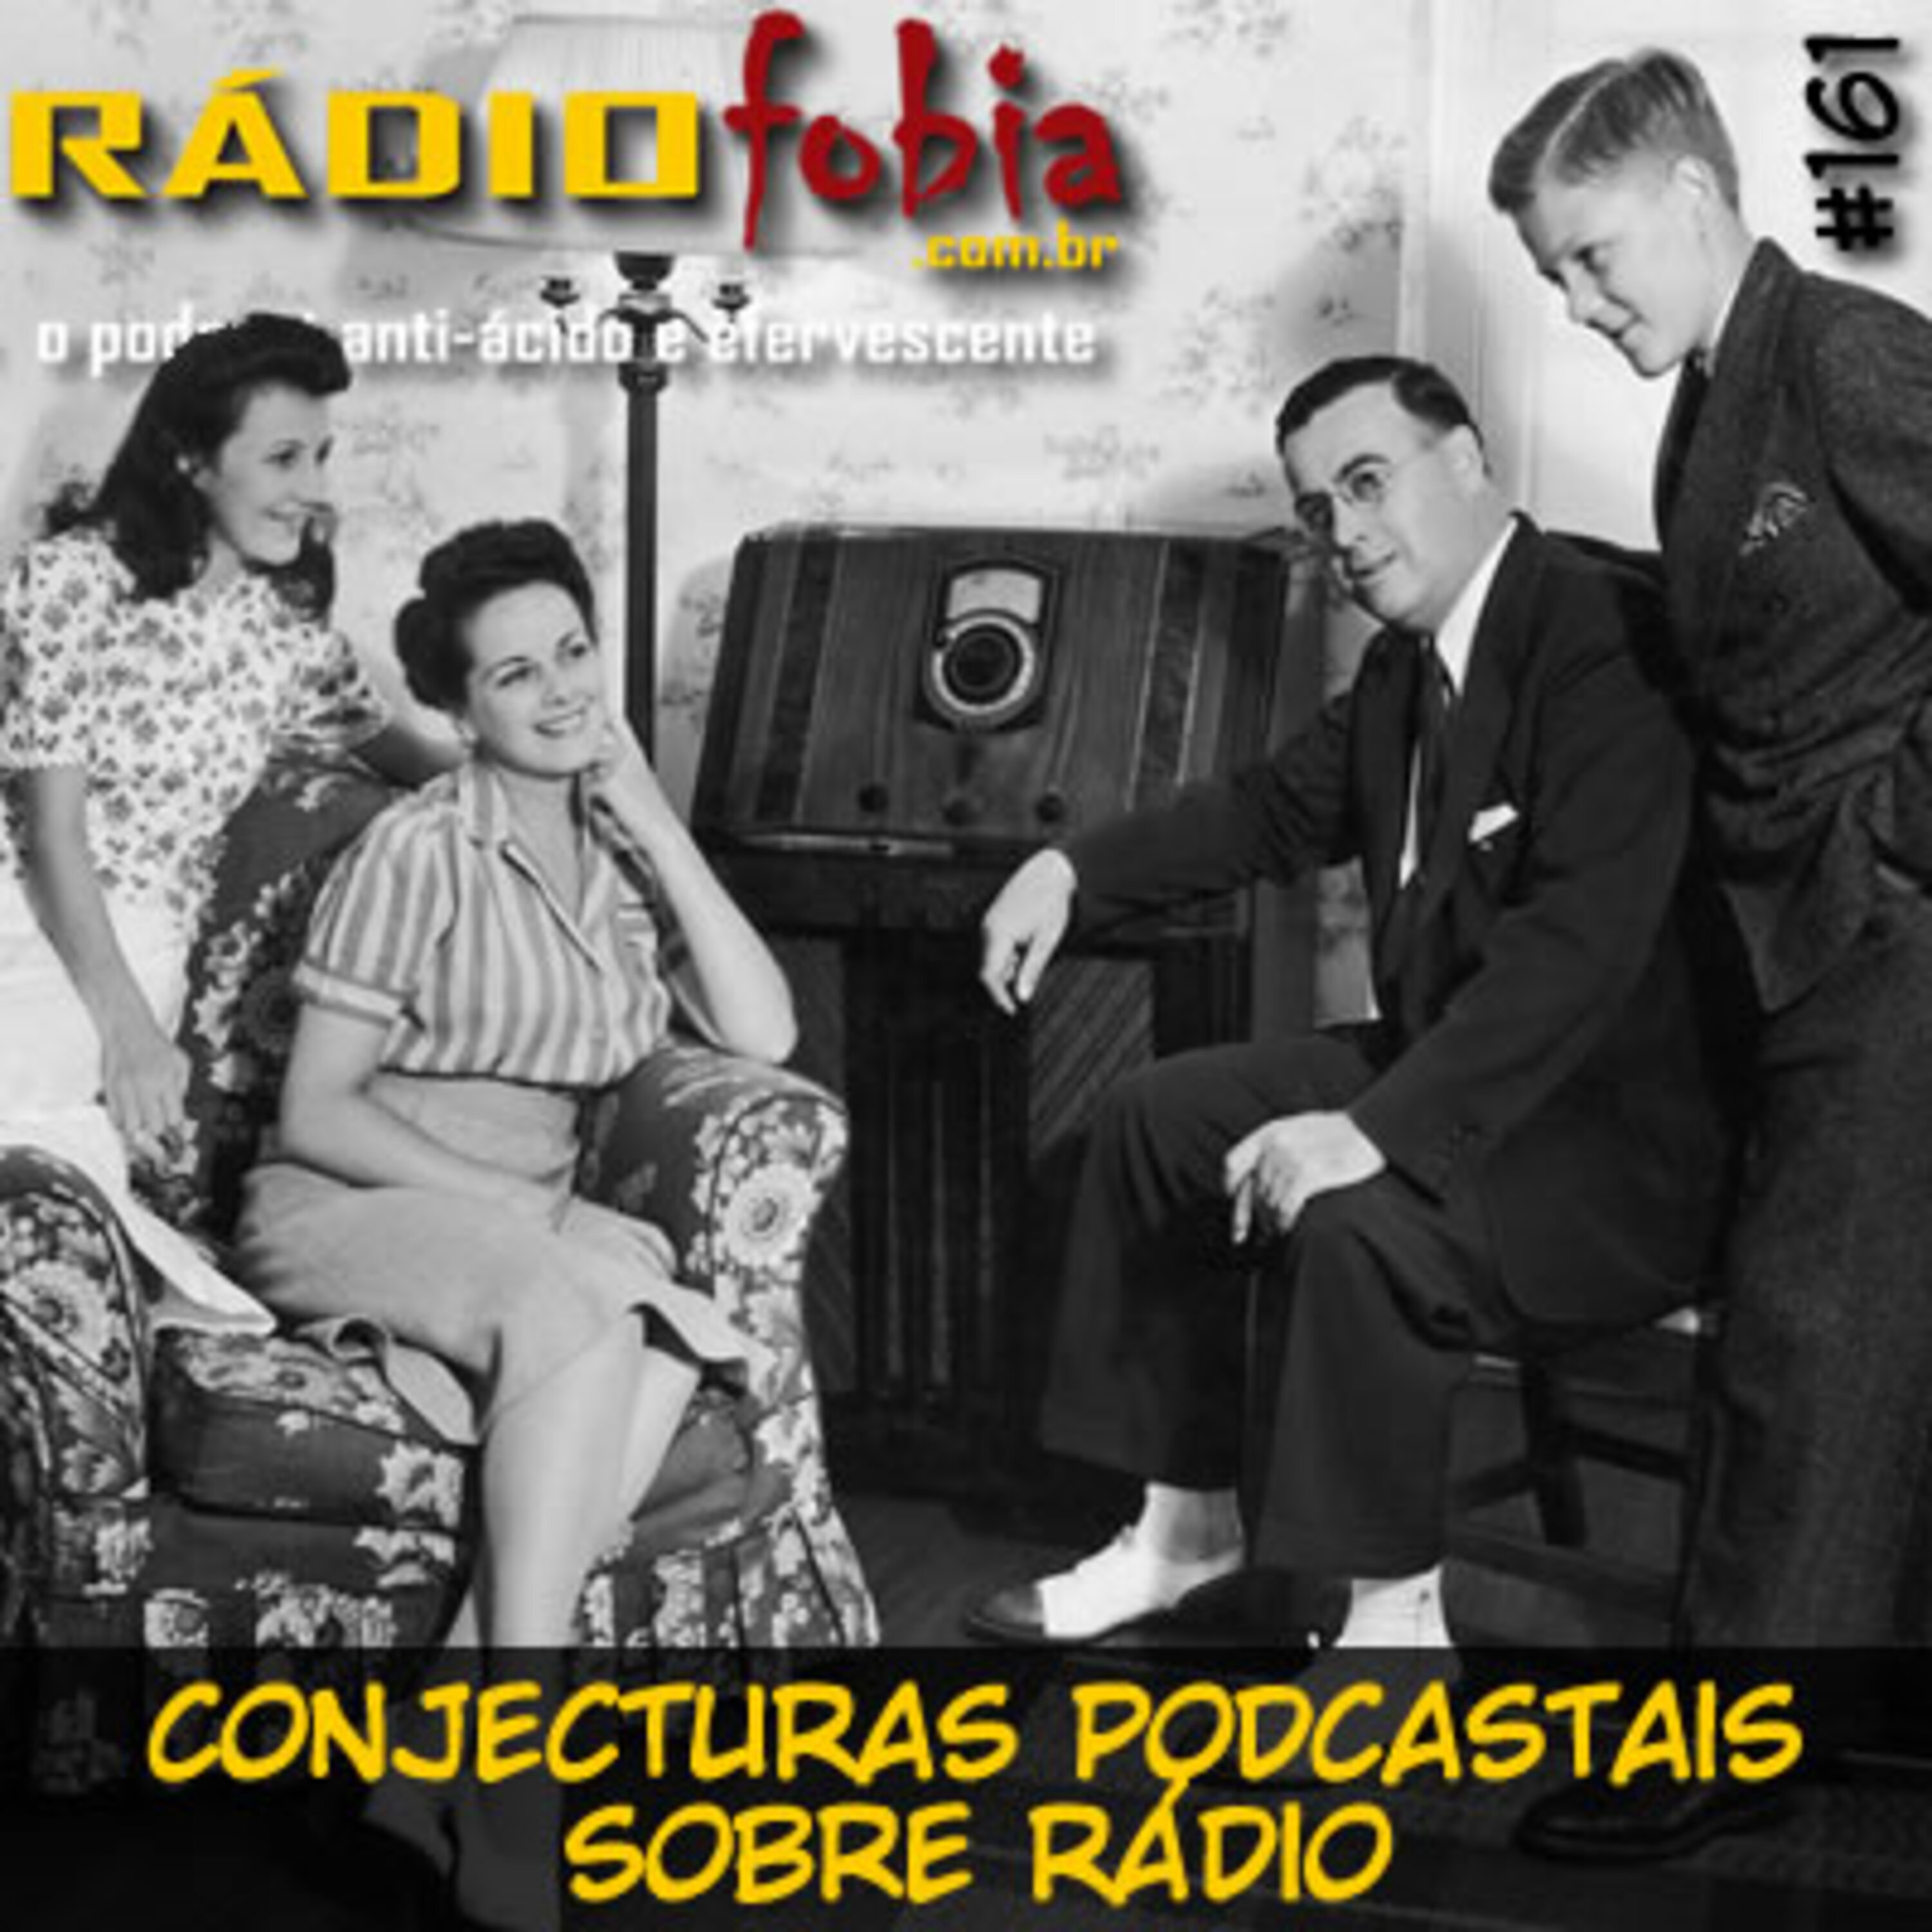 RADIOFOBIA 161 – Conjecturas podcastais sobre RÁDIO